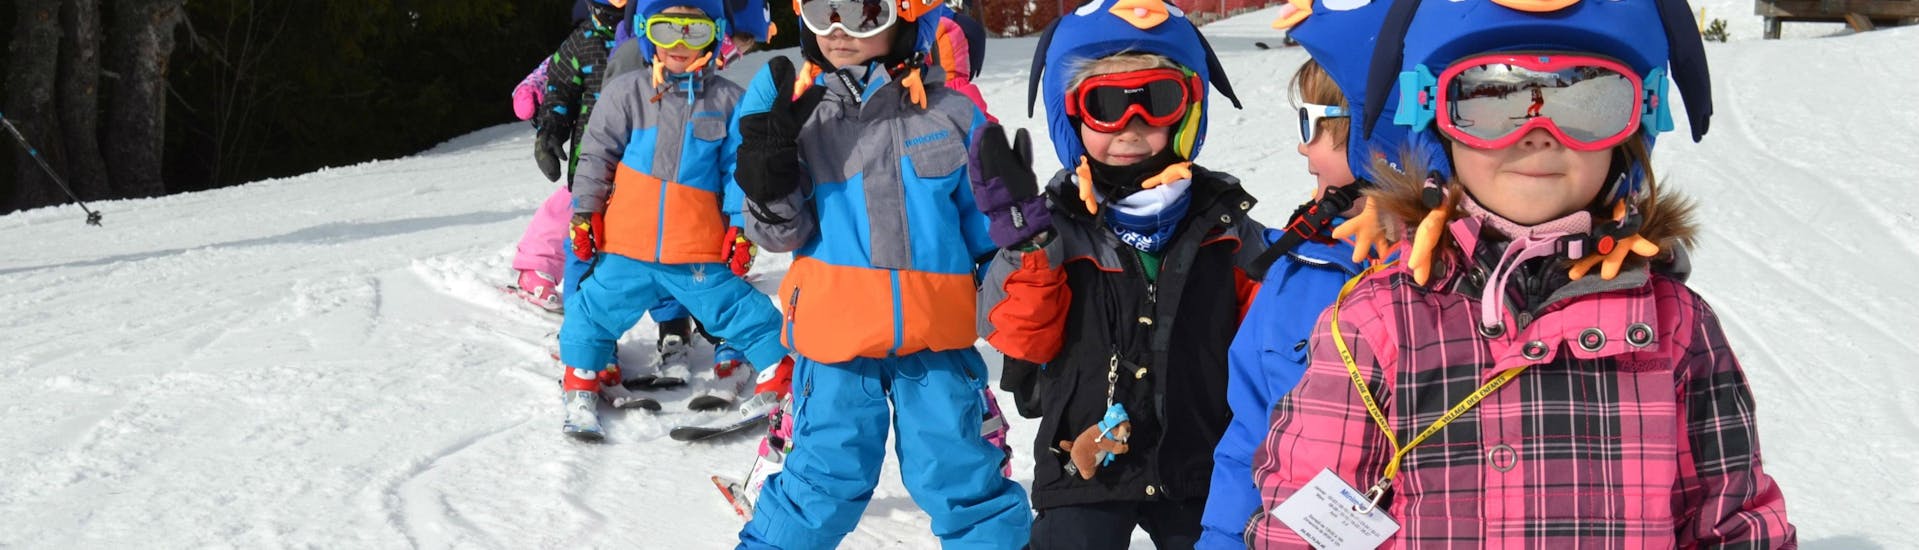 Kinder-Skikurs für alle Levels.